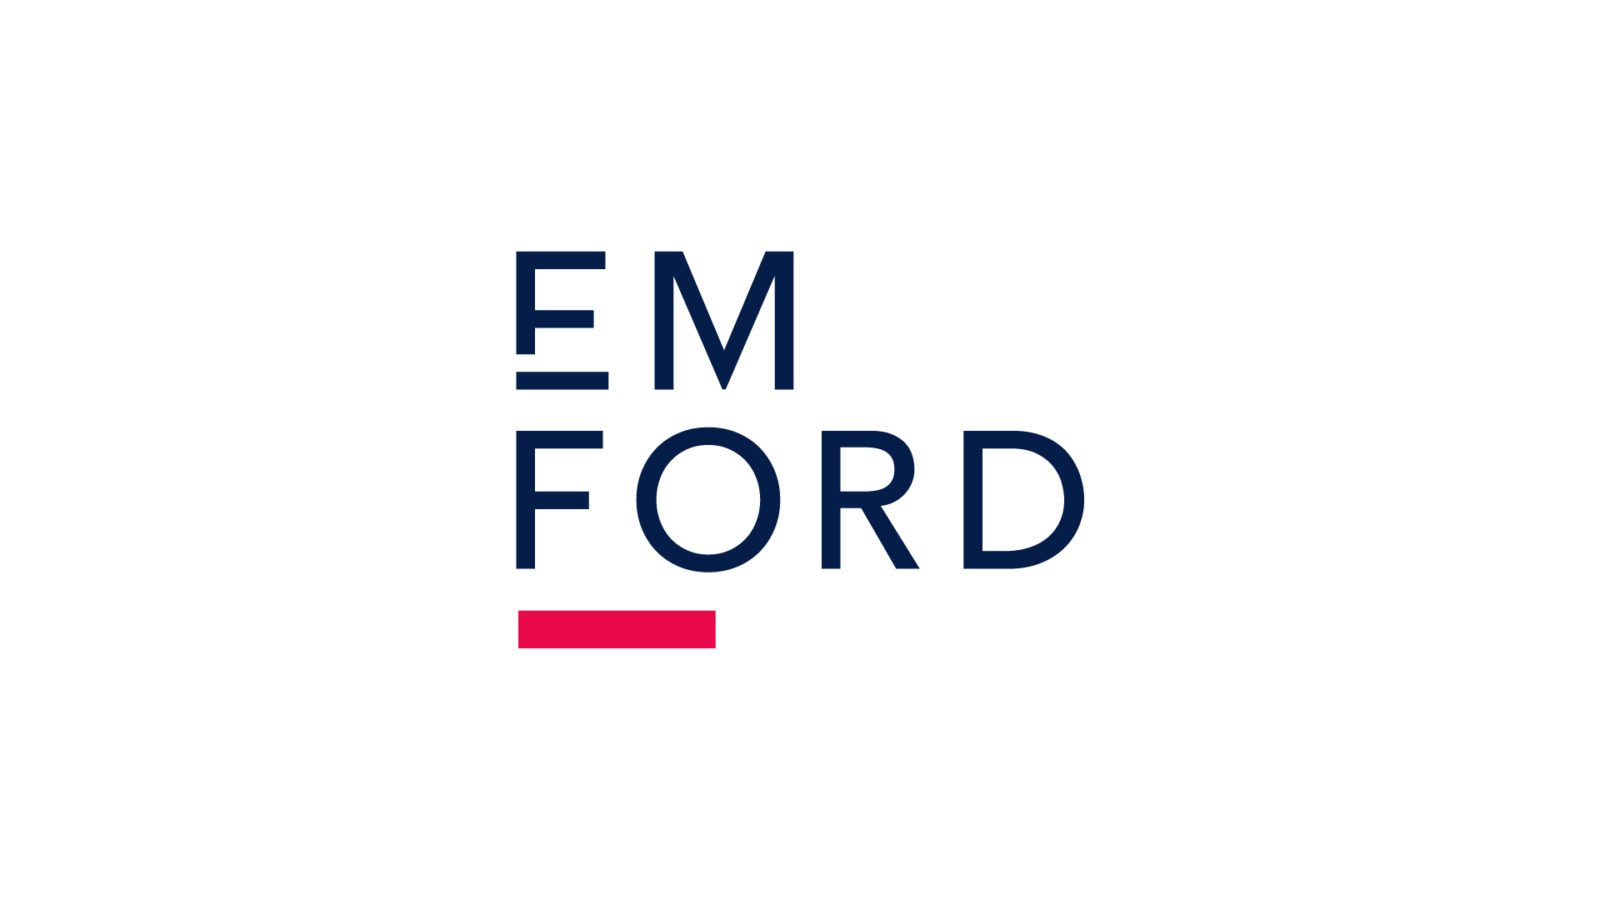 An Identity for EM Ford By Bullhorn Creative